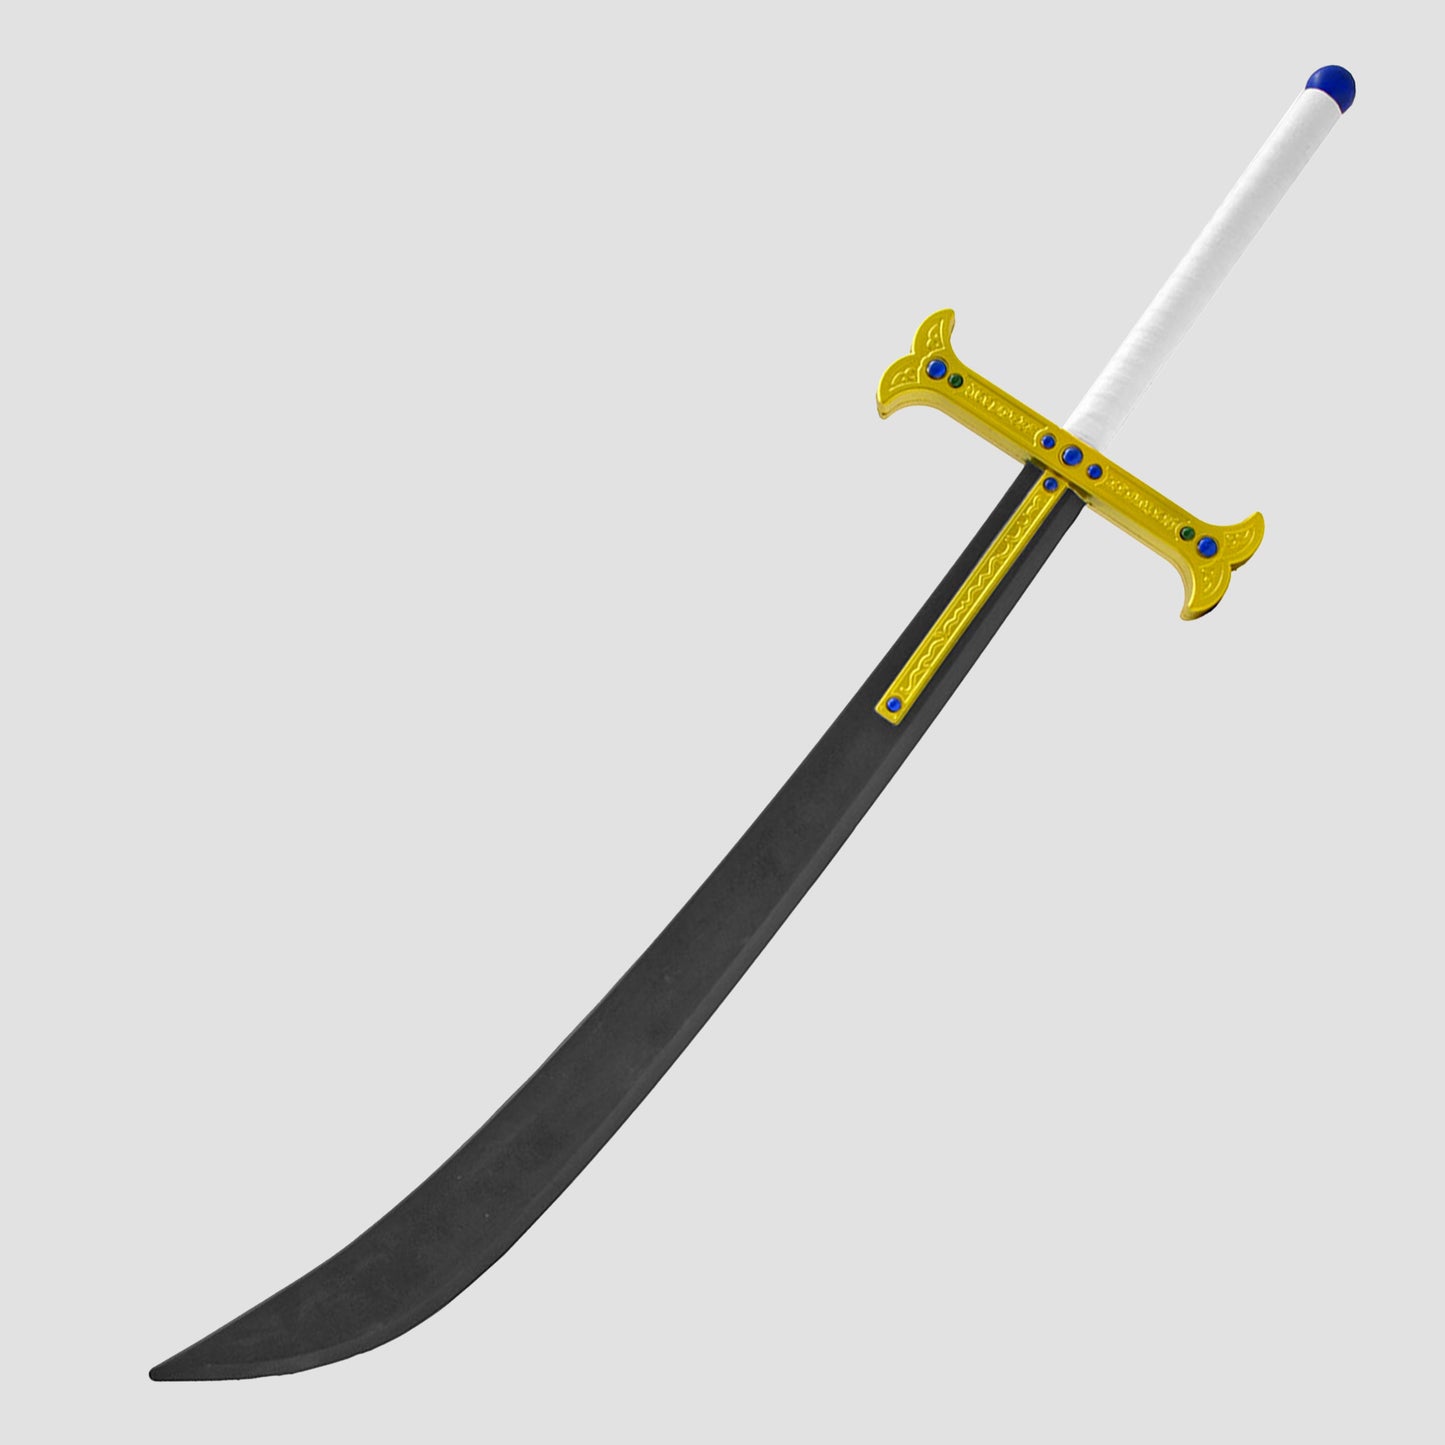  Animation Cosplay Mihawk Weapons Prop Toy Sword Yoru Anime  Sword for Weapon Cosplay Props and Collection Black : ספורט ופעילות בחיק  הטבע